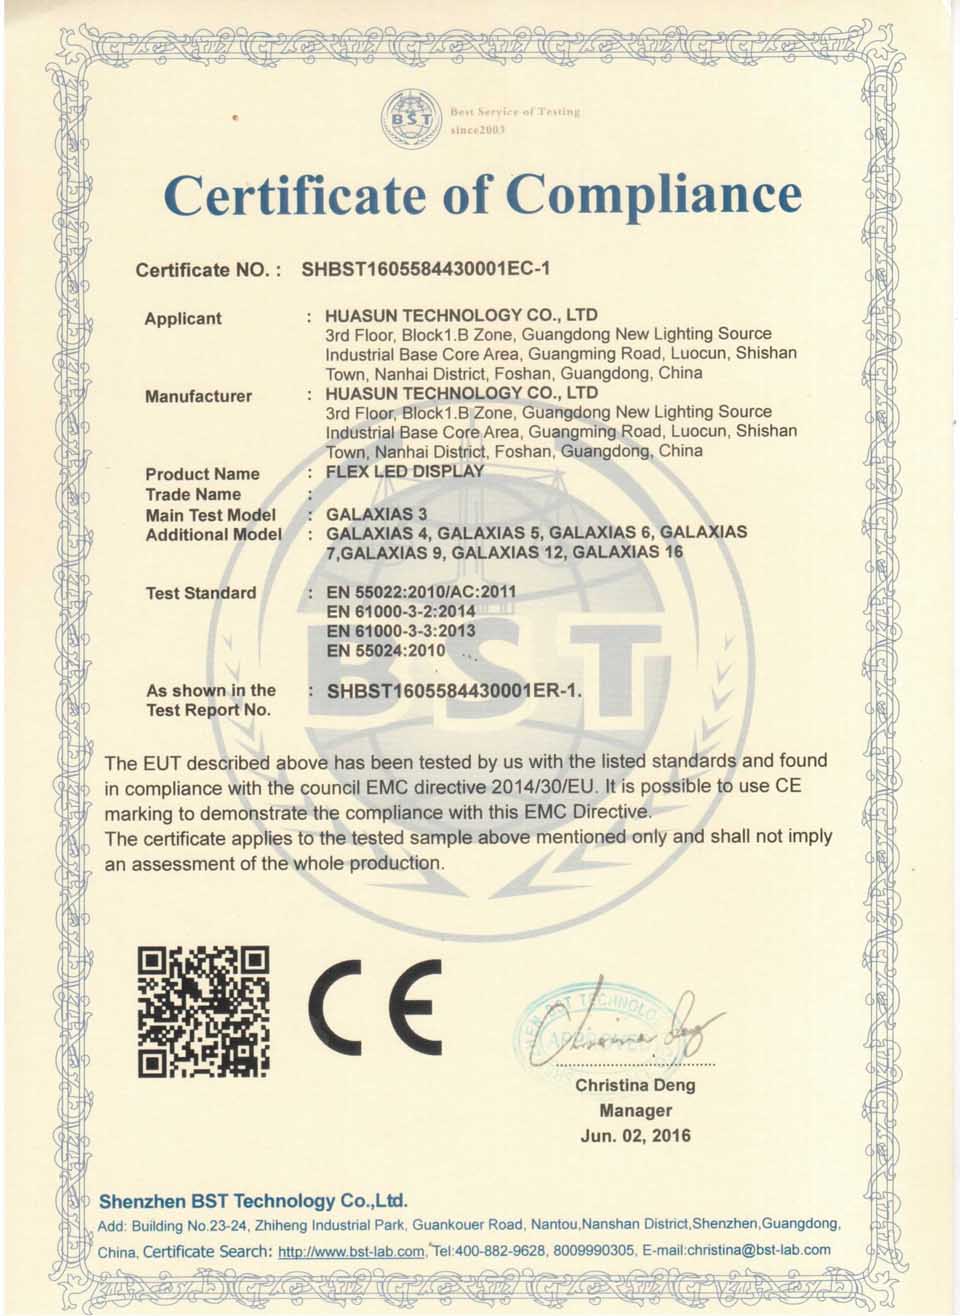 сертификация CE